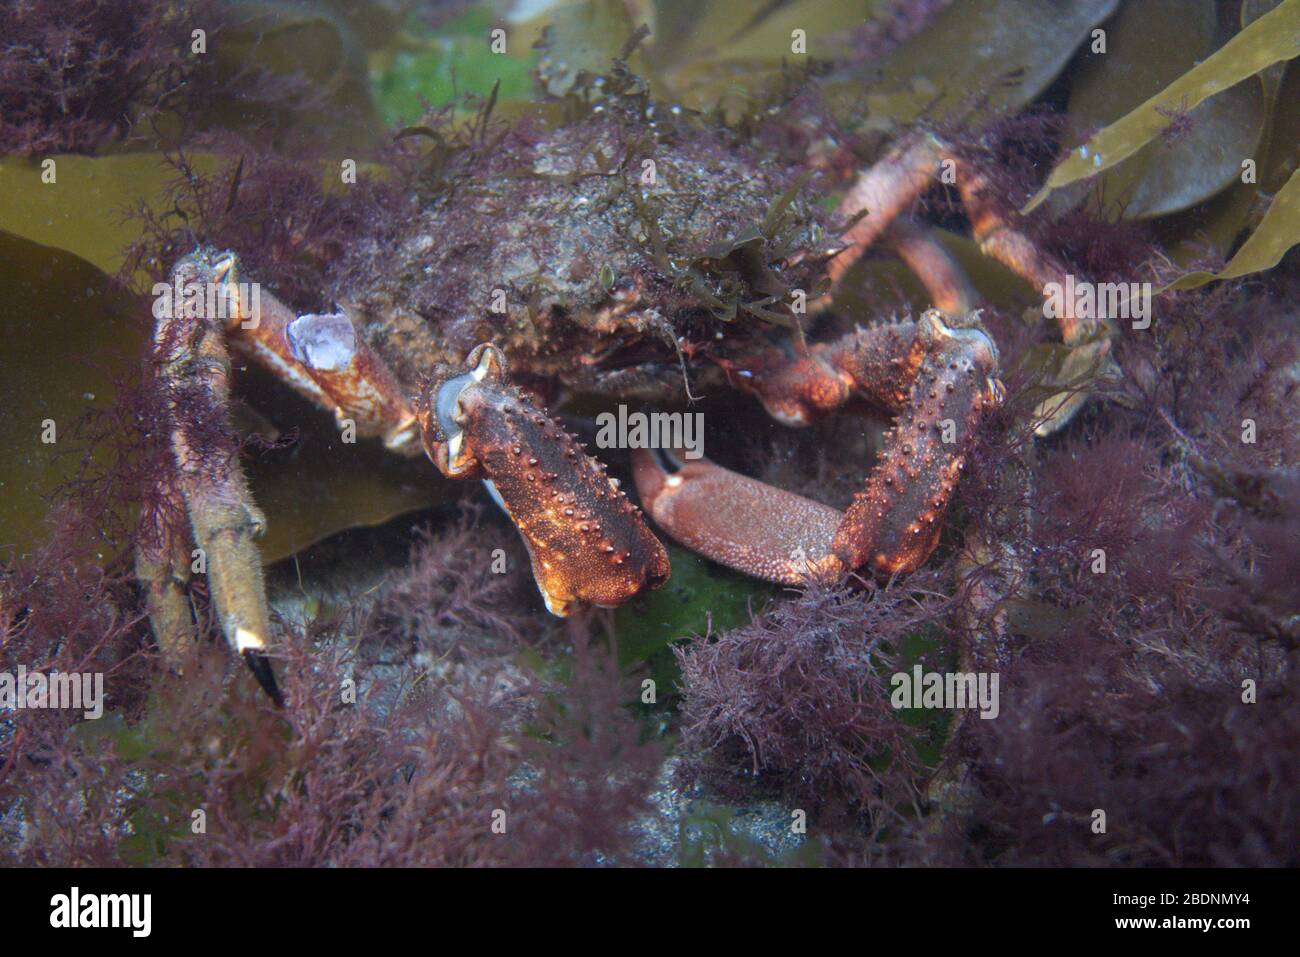 Spider crab in Ireland Stock Photo